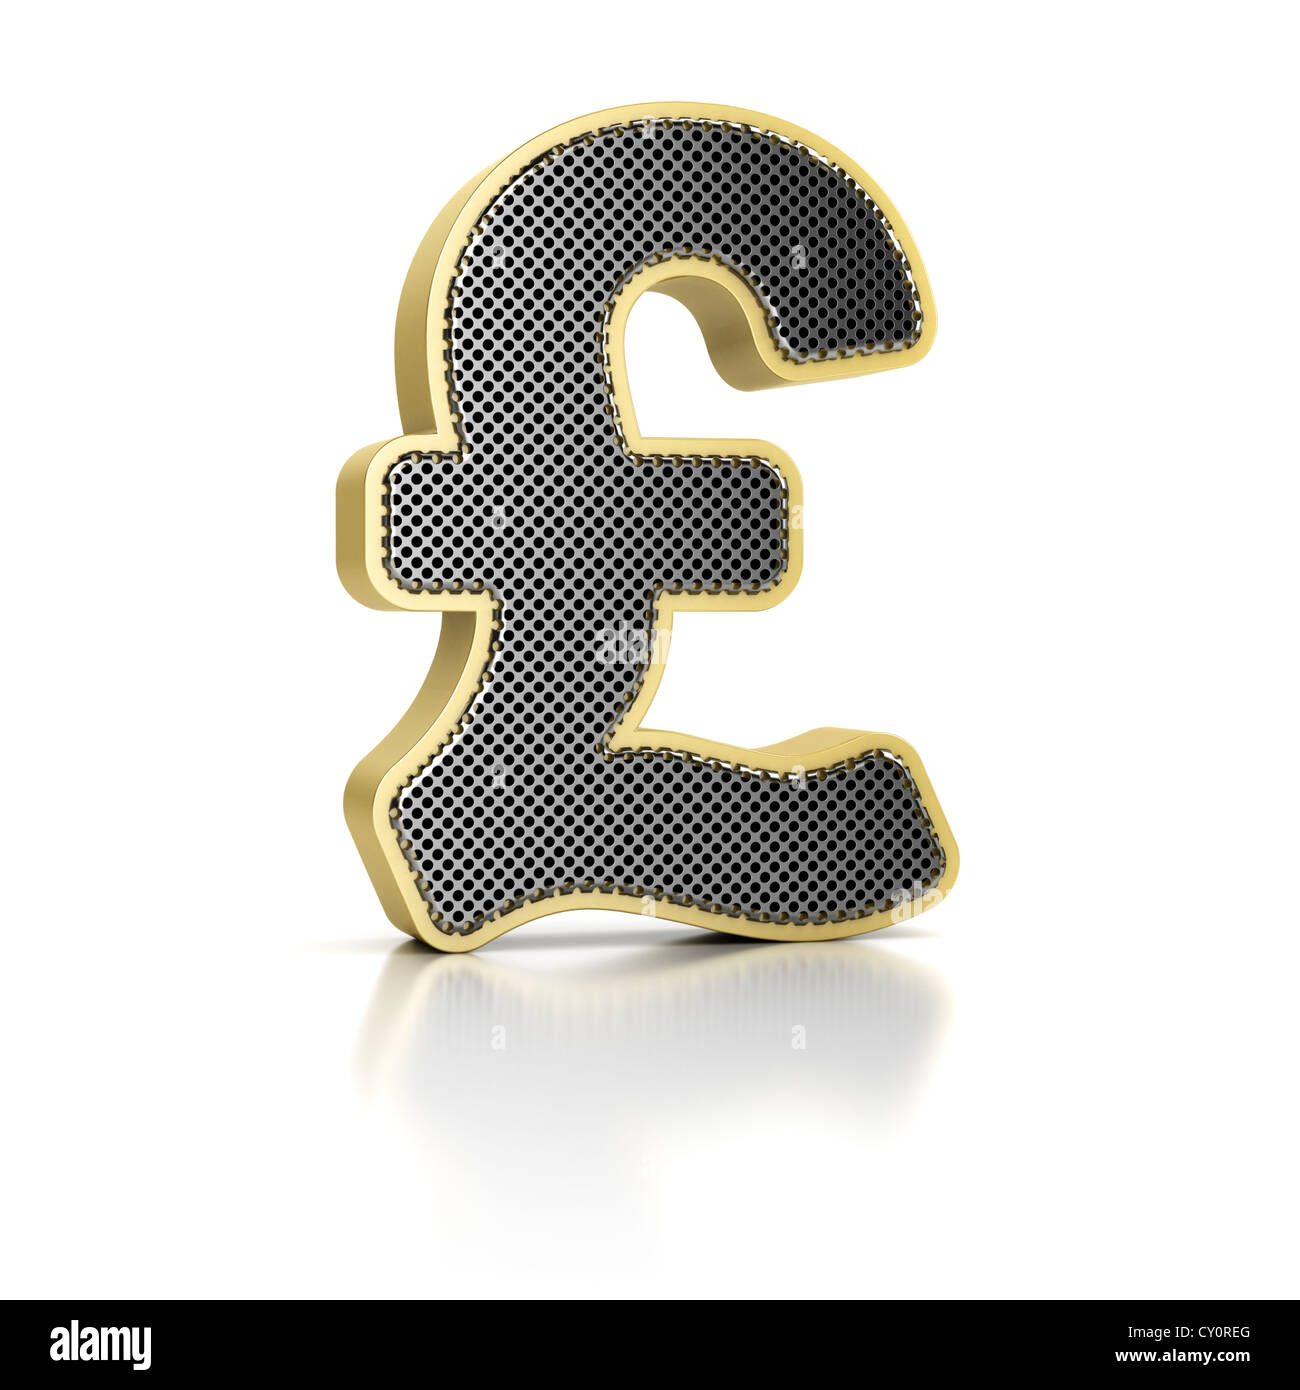 The British Pound sign Stock Photo